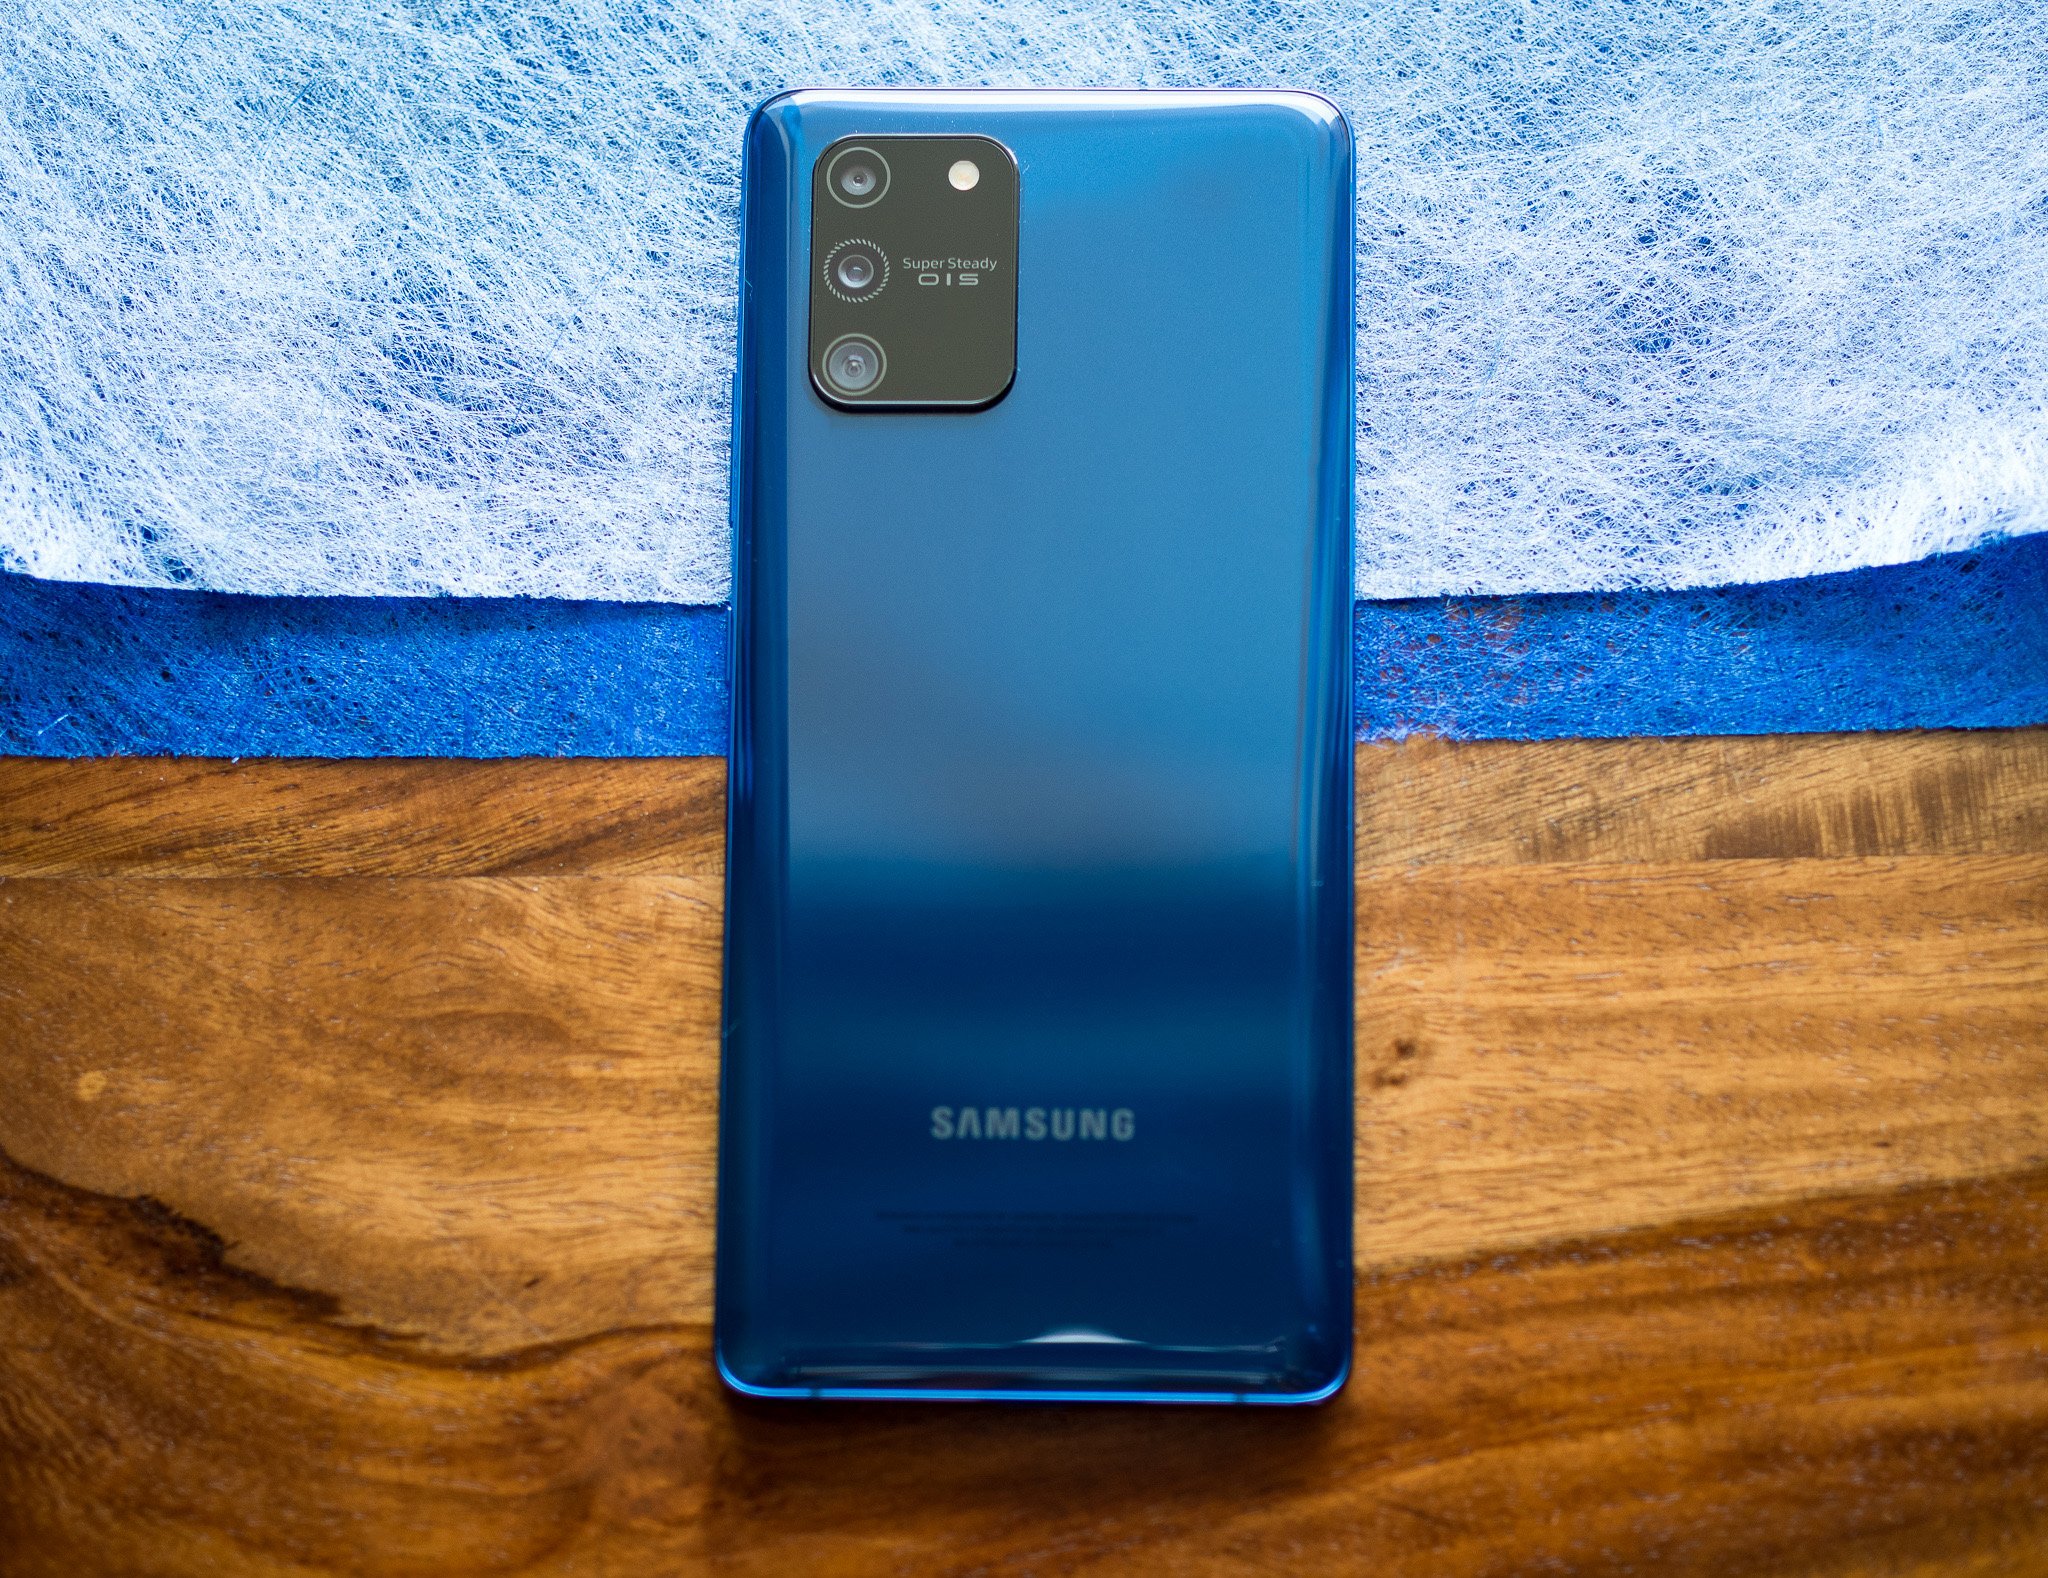 Thin Fit Premium Hard Plastic Matte Finish Anti-Scratch Cover Cases for Samsung Galaxy S10 Lite 6.7 Red ORNARTO Case for Samsung S10 Lite 2020